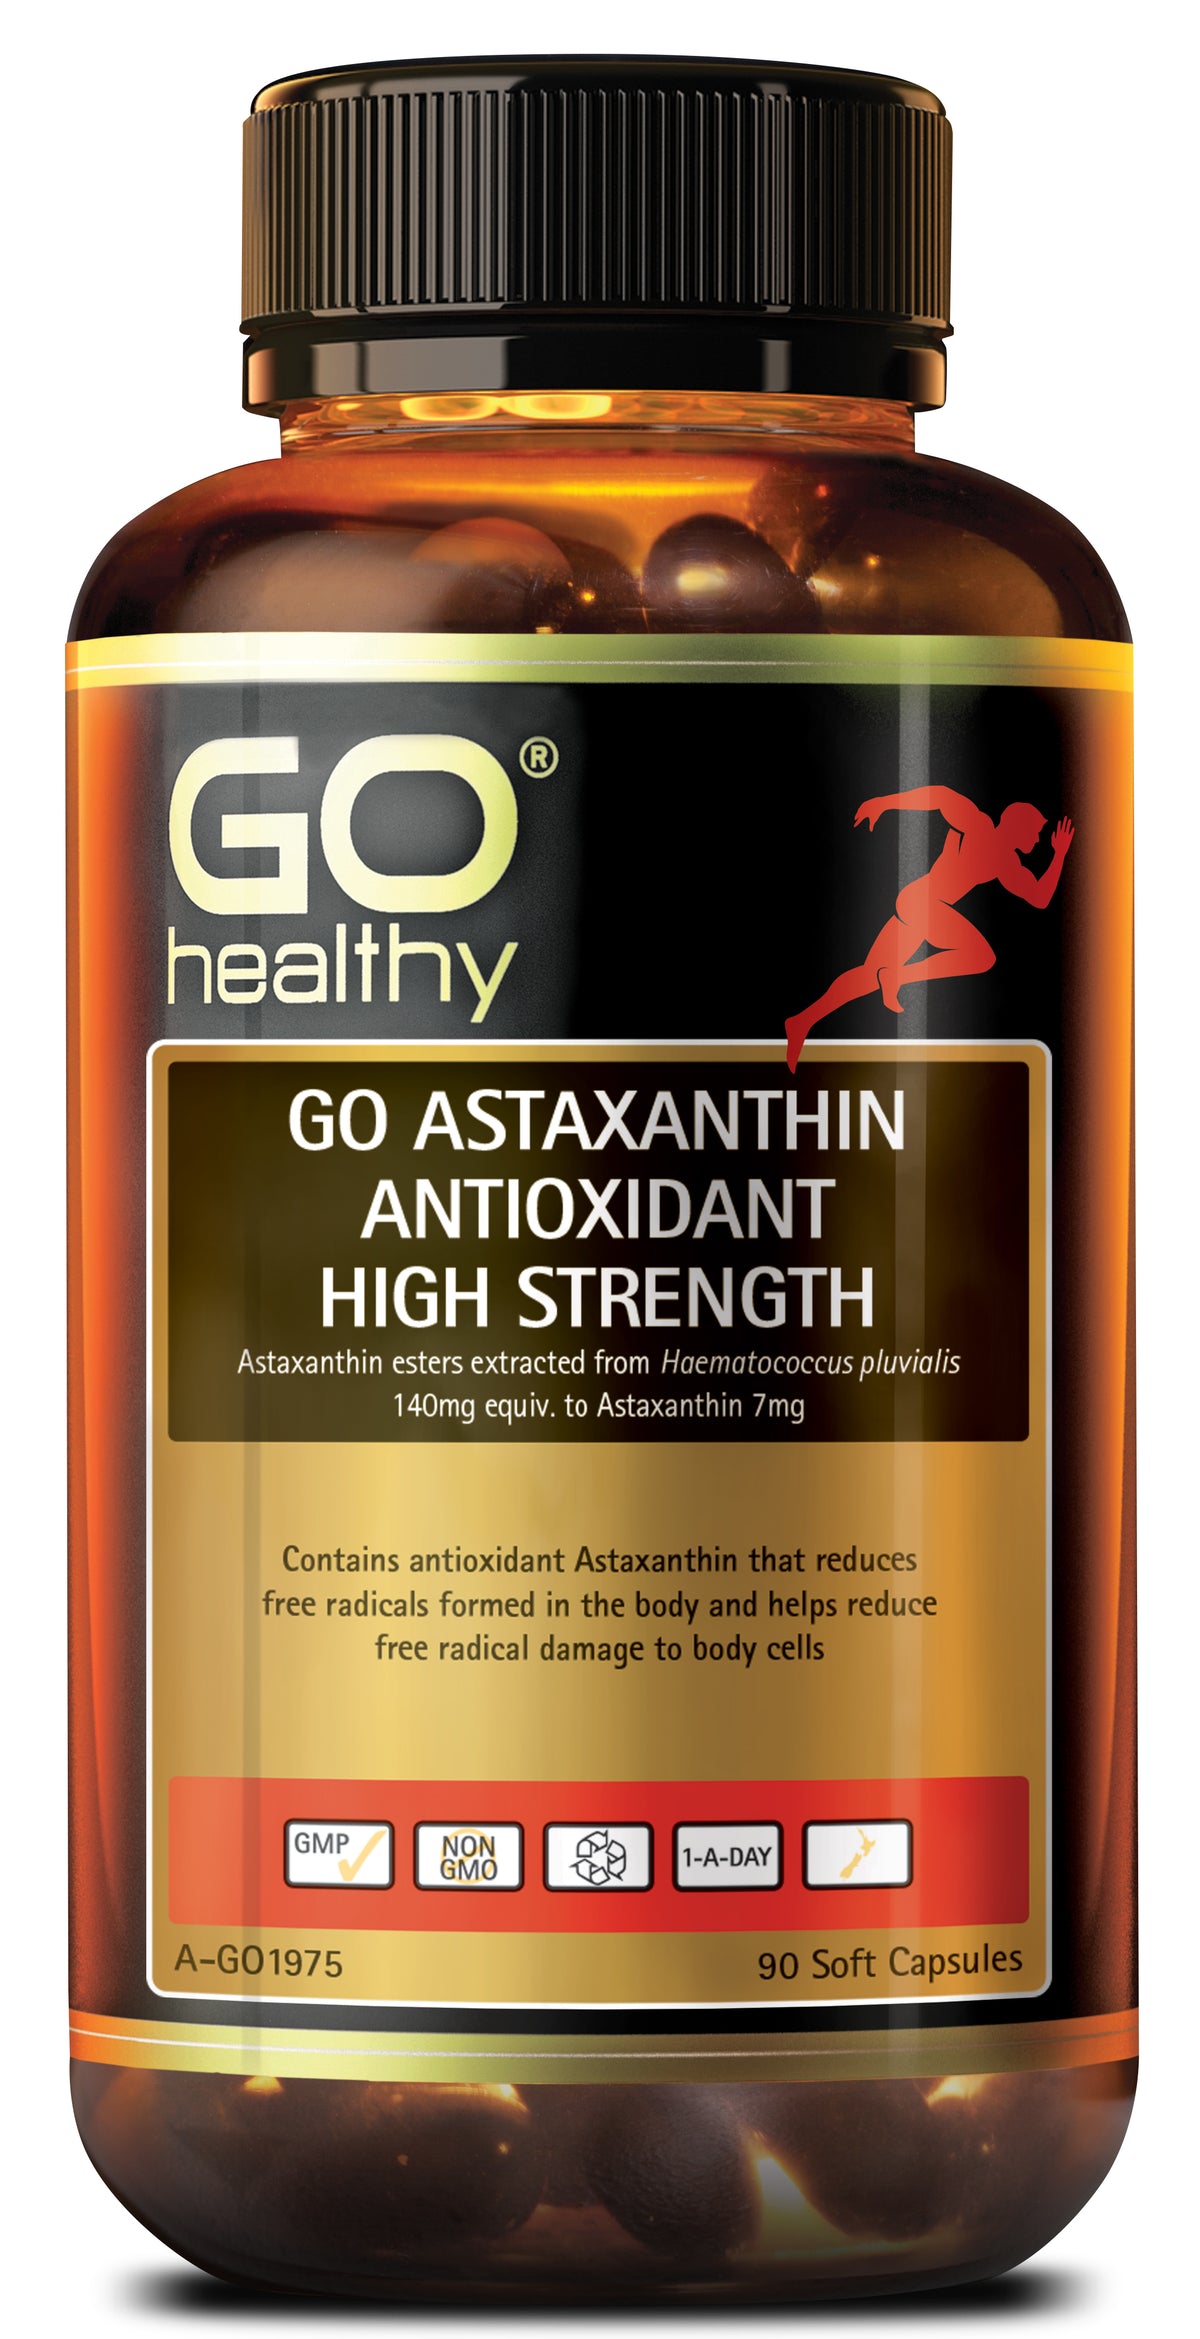 Go Healthy Astaxanthin Antioxidant High Strength 90 Soft Capsules